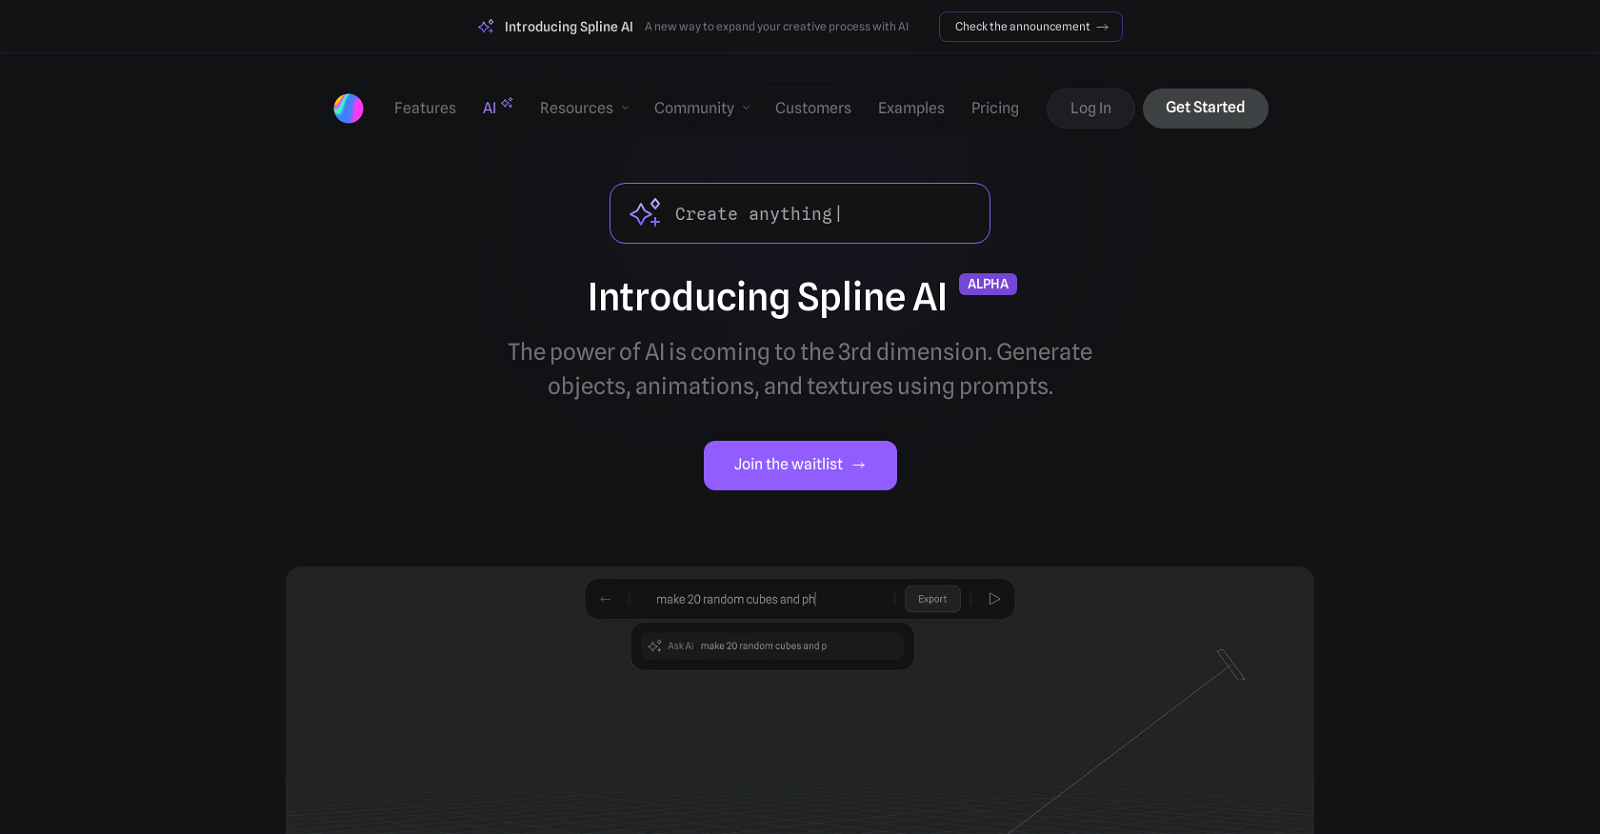 Spline AI (Alpha)